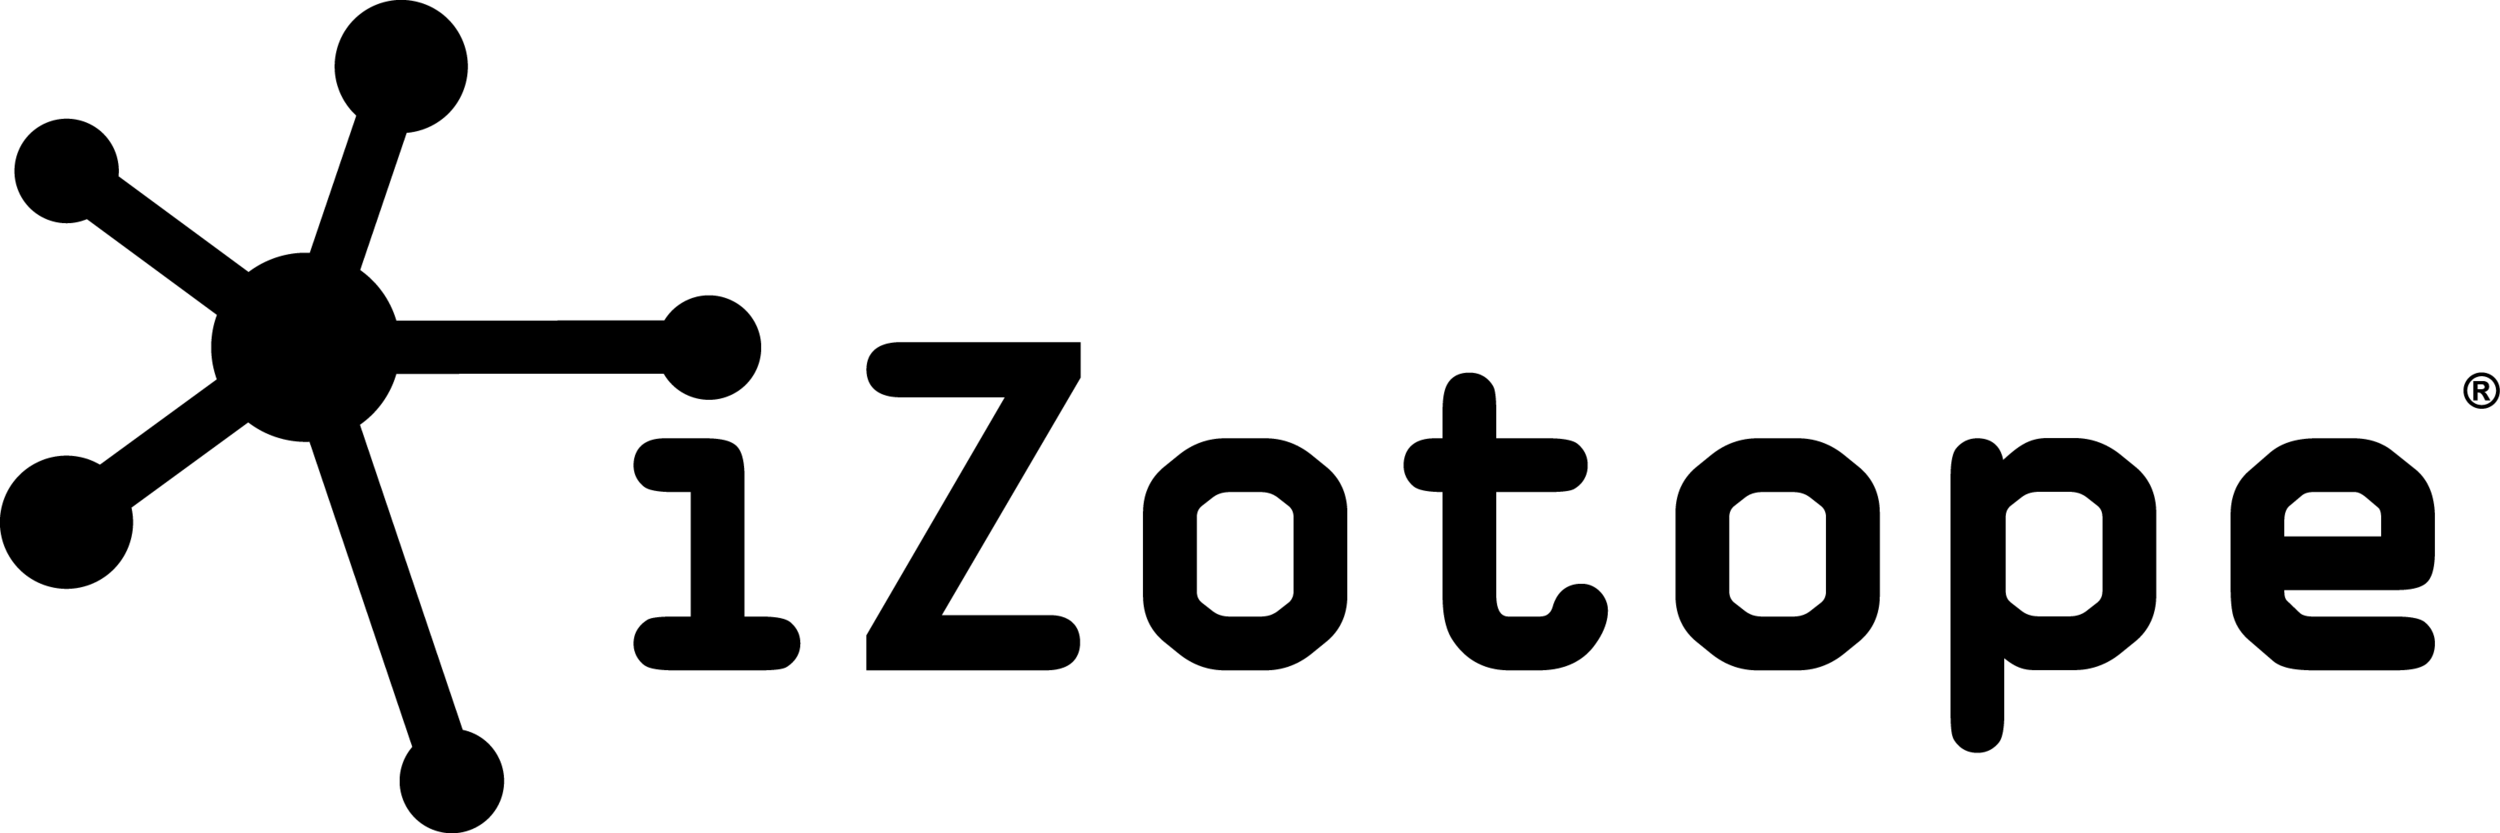 izotope-logo-black.png